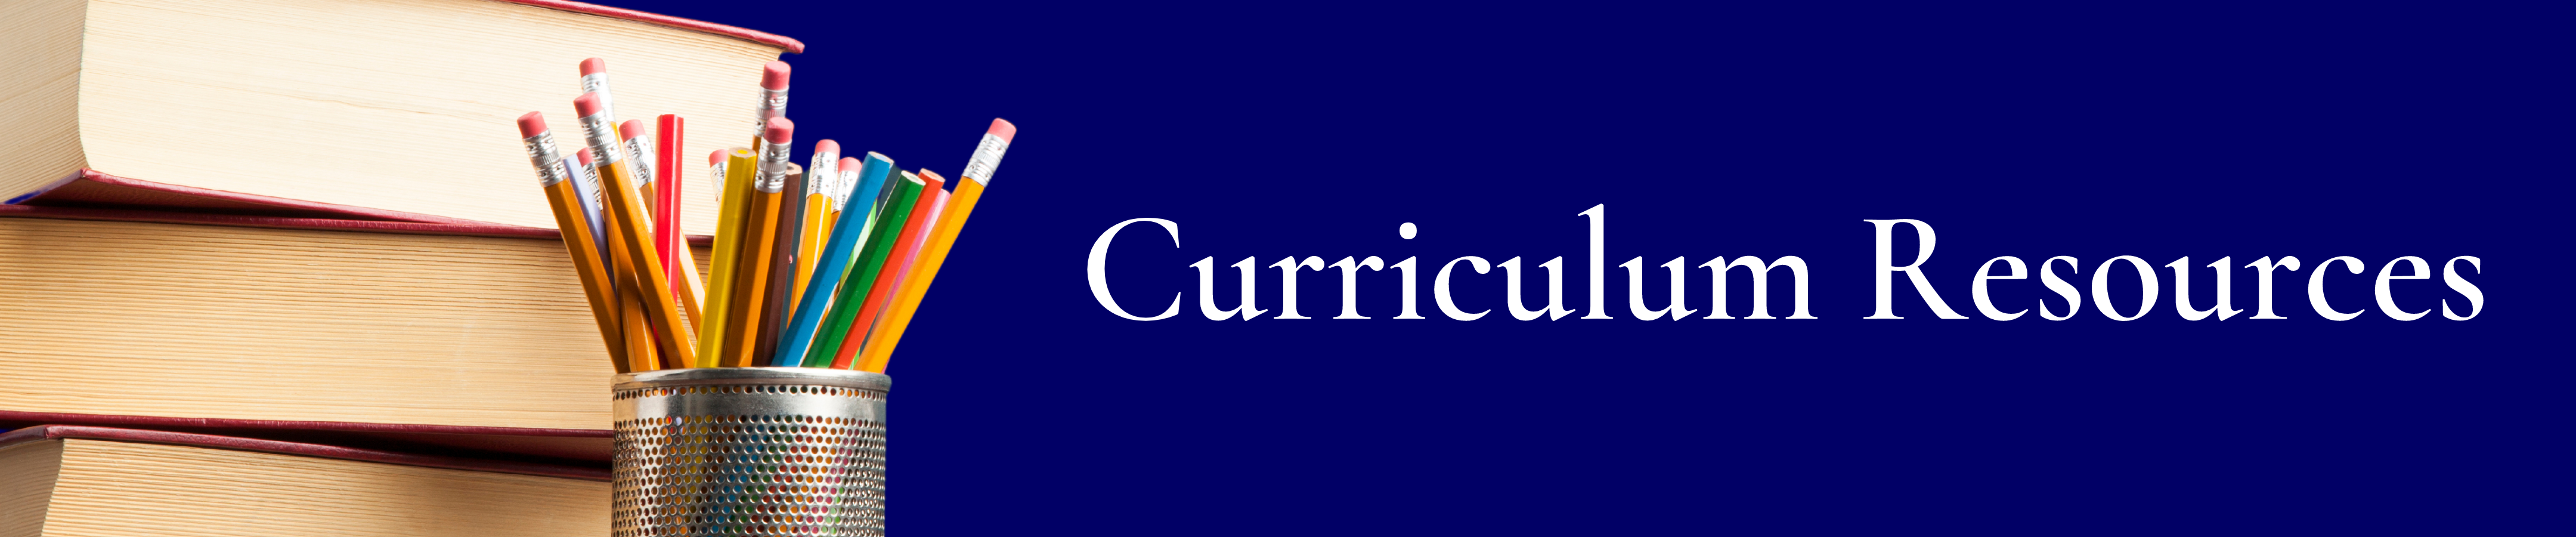 Curriculum Resources Banner